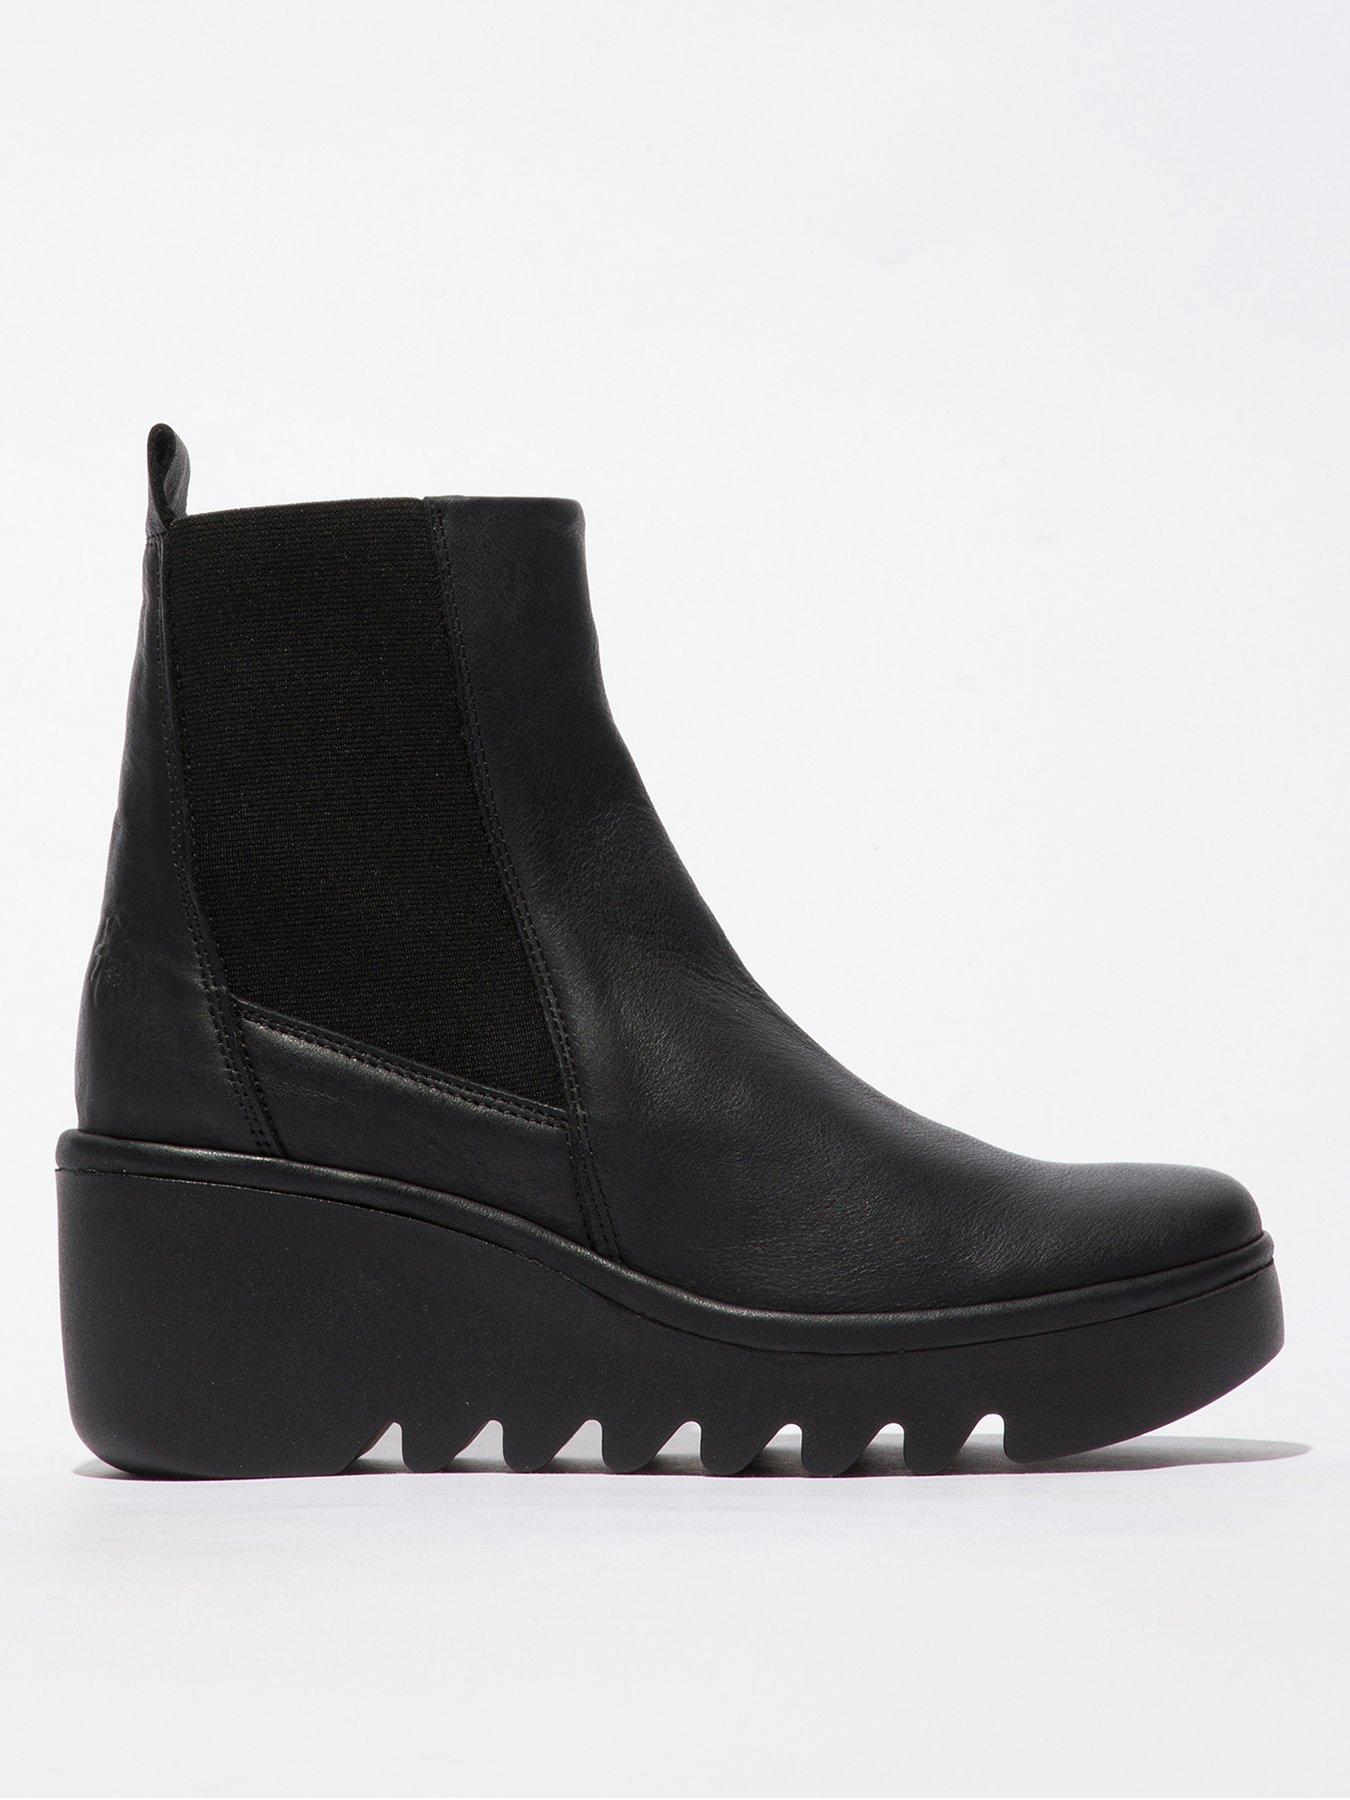  Bagu Wedge Chelsea Boots - Black